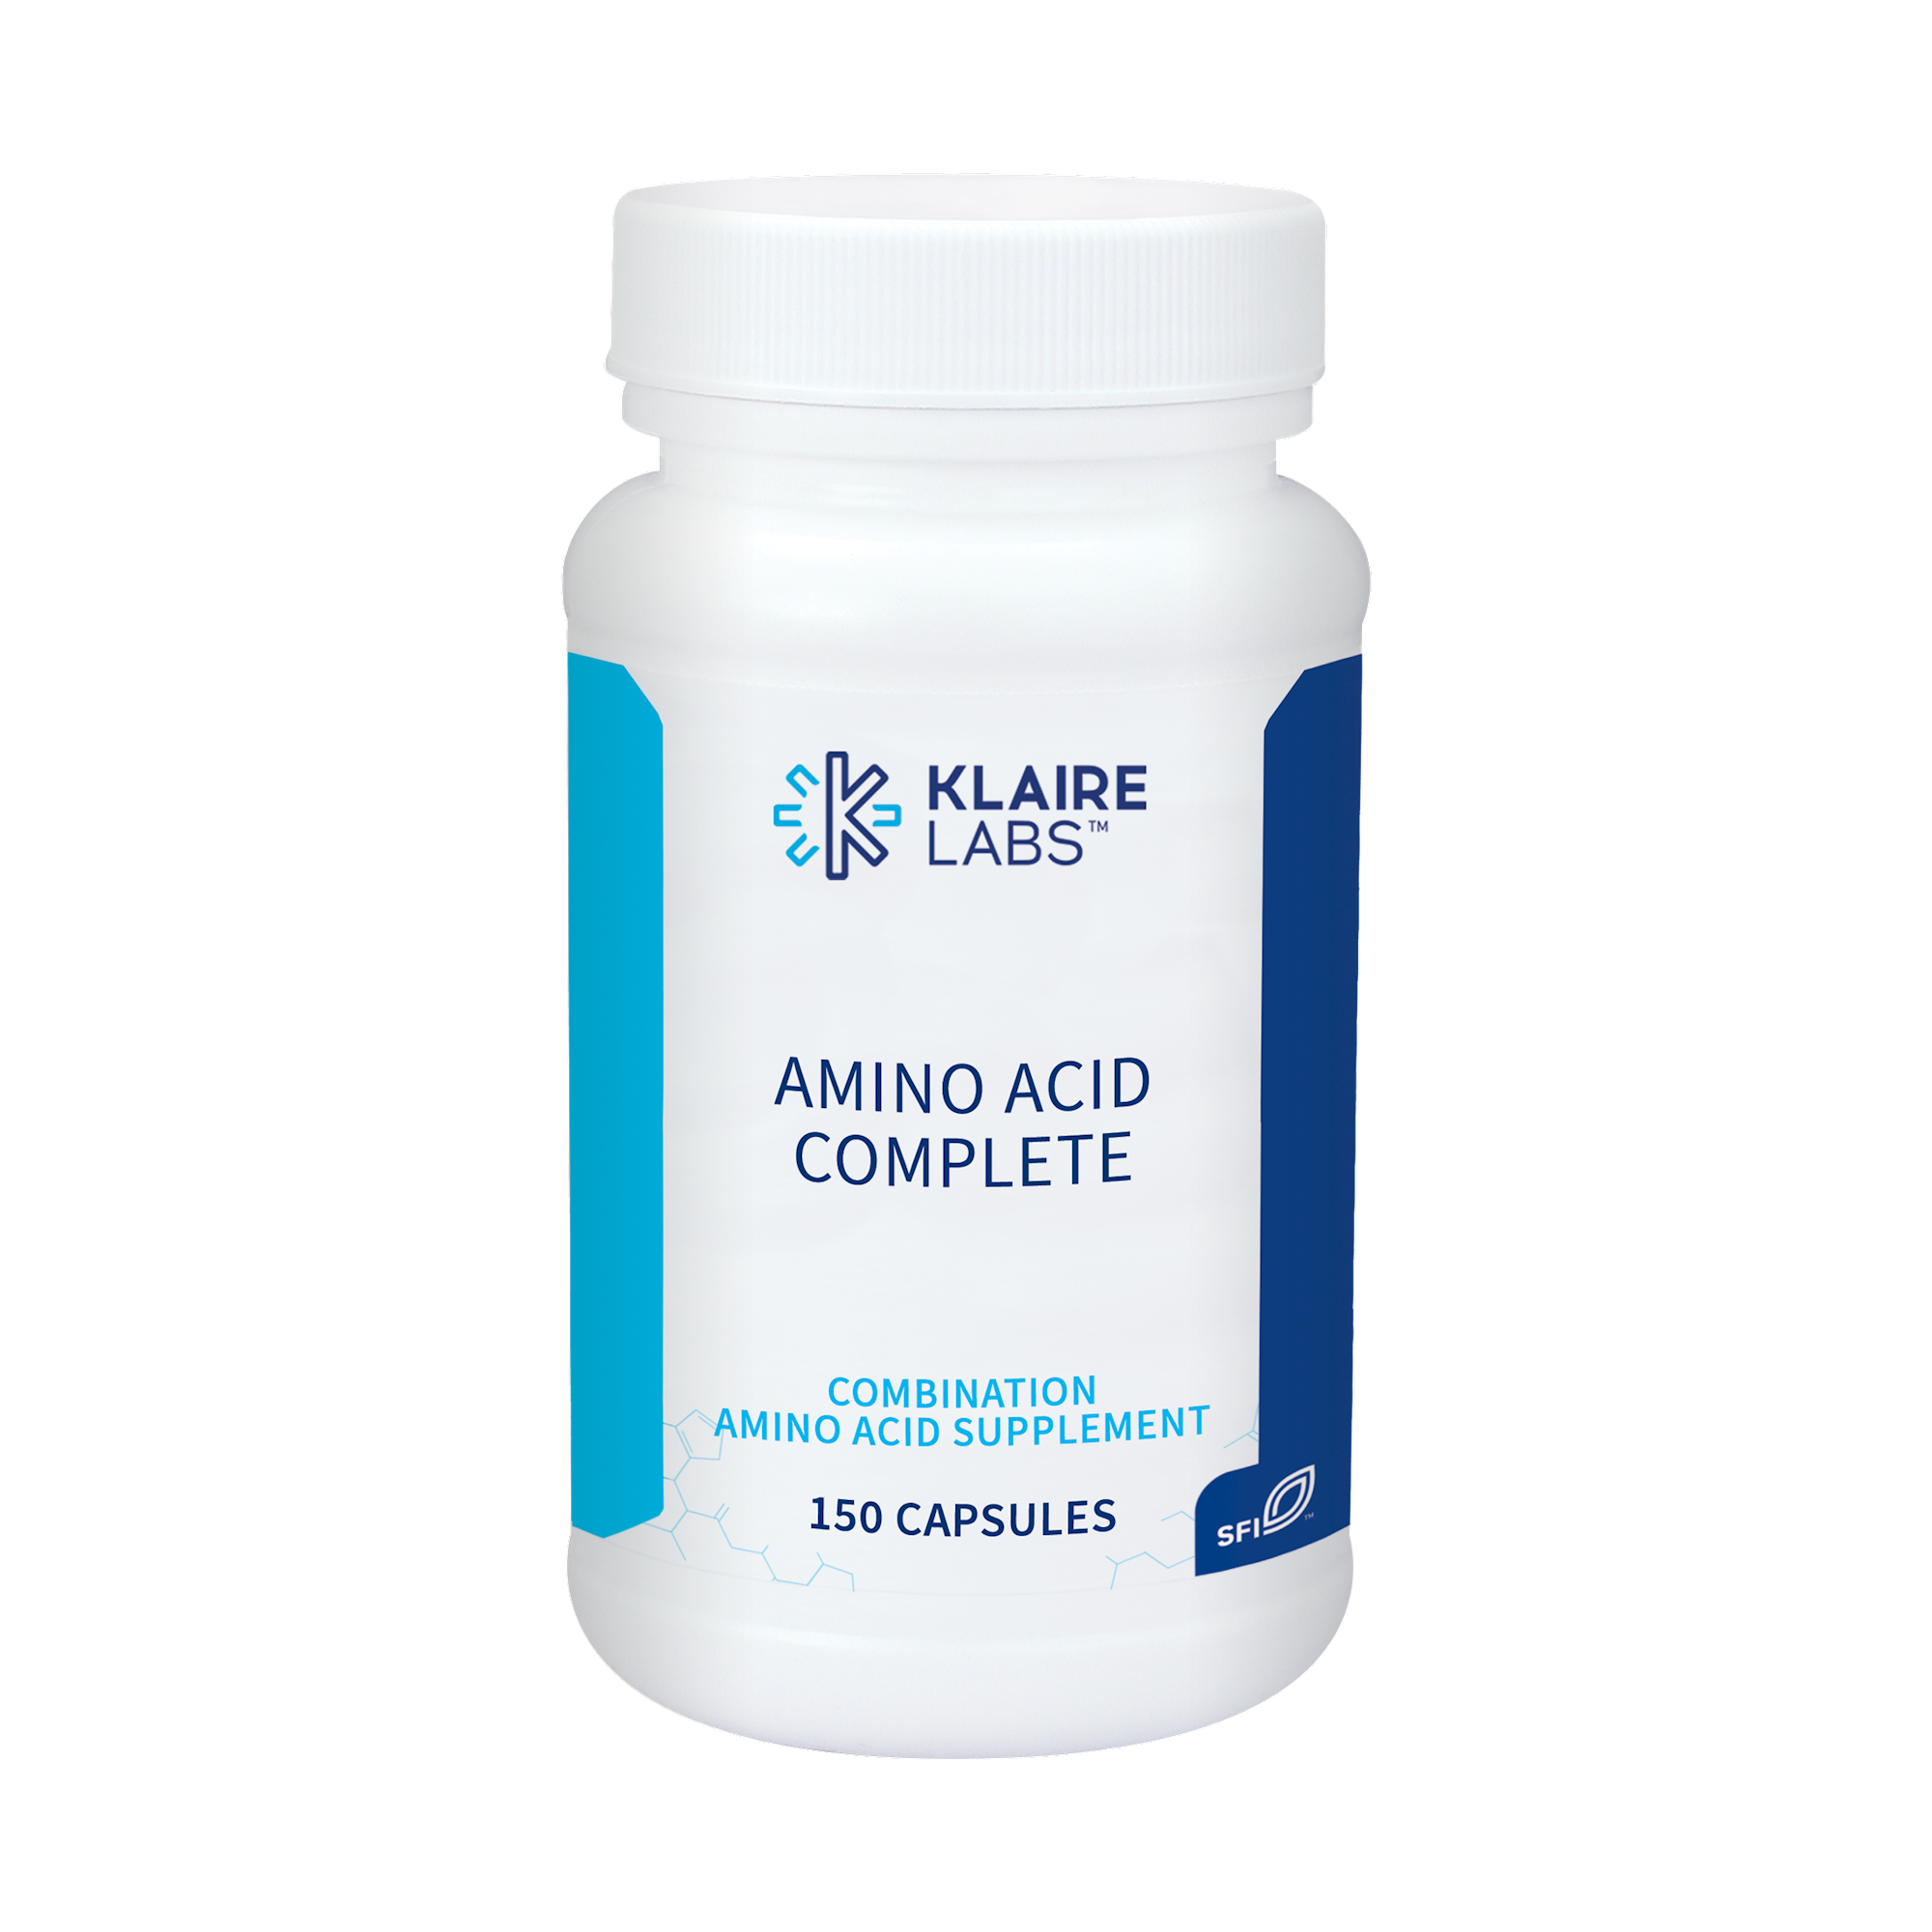 Amino Acid Complete